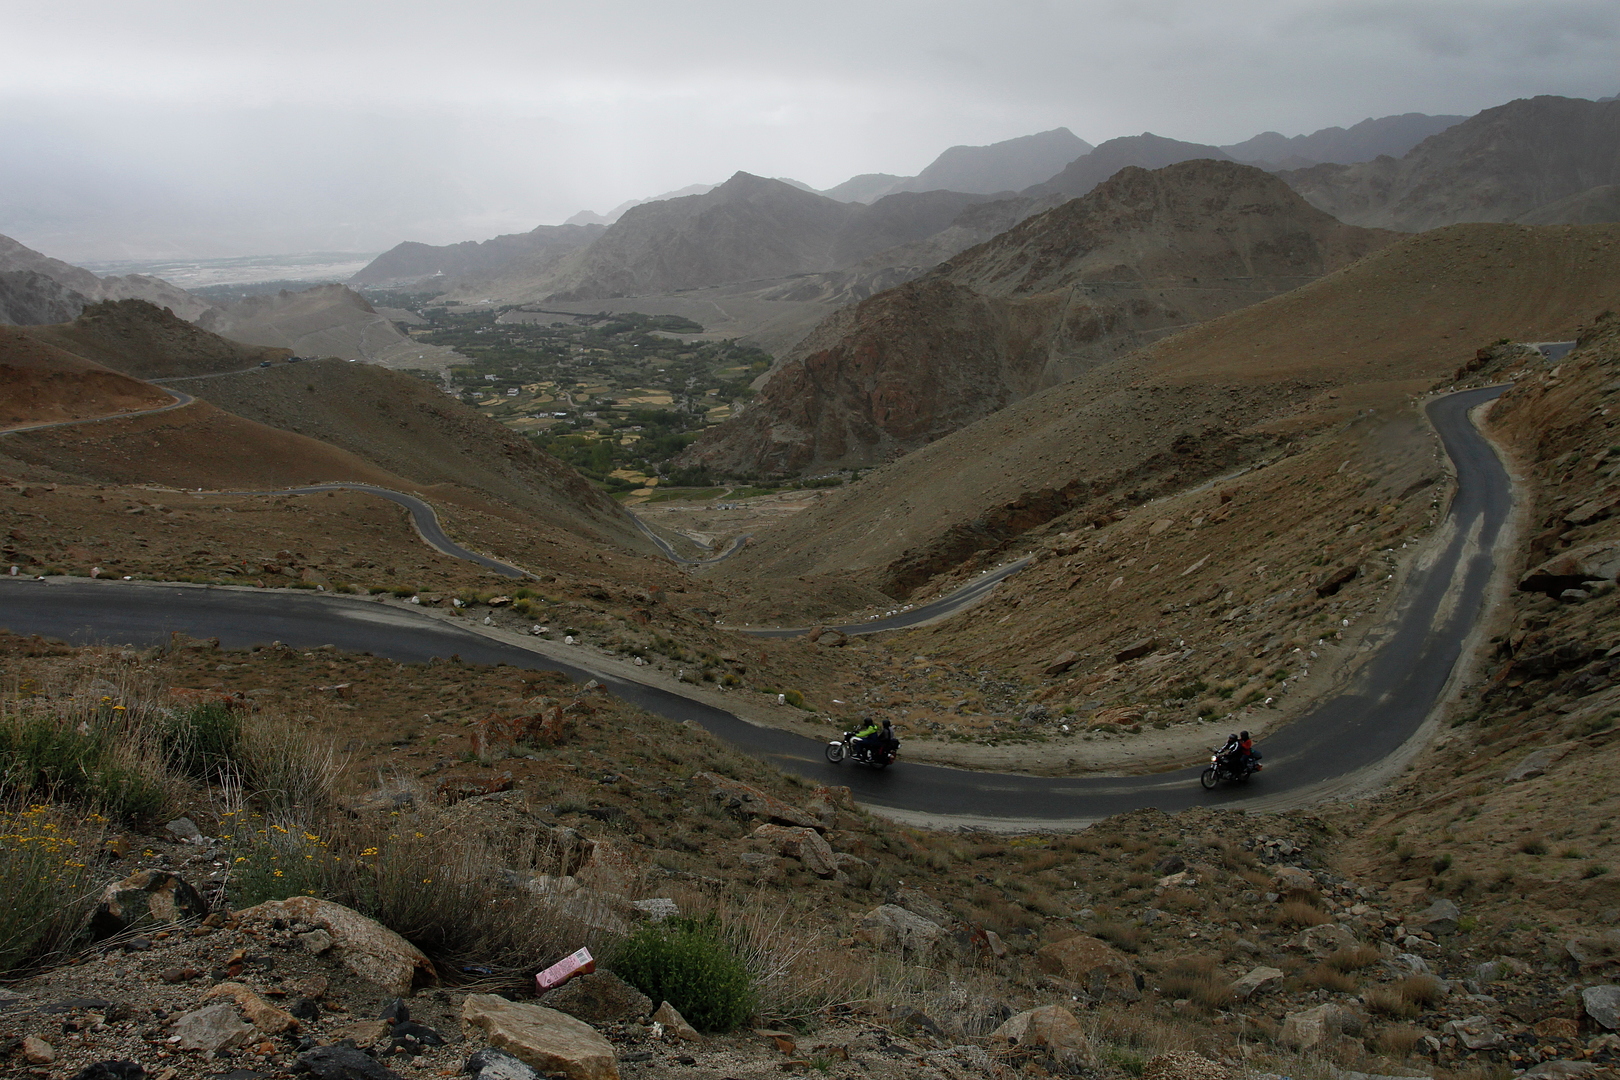 Motorcycling in Ladakh.